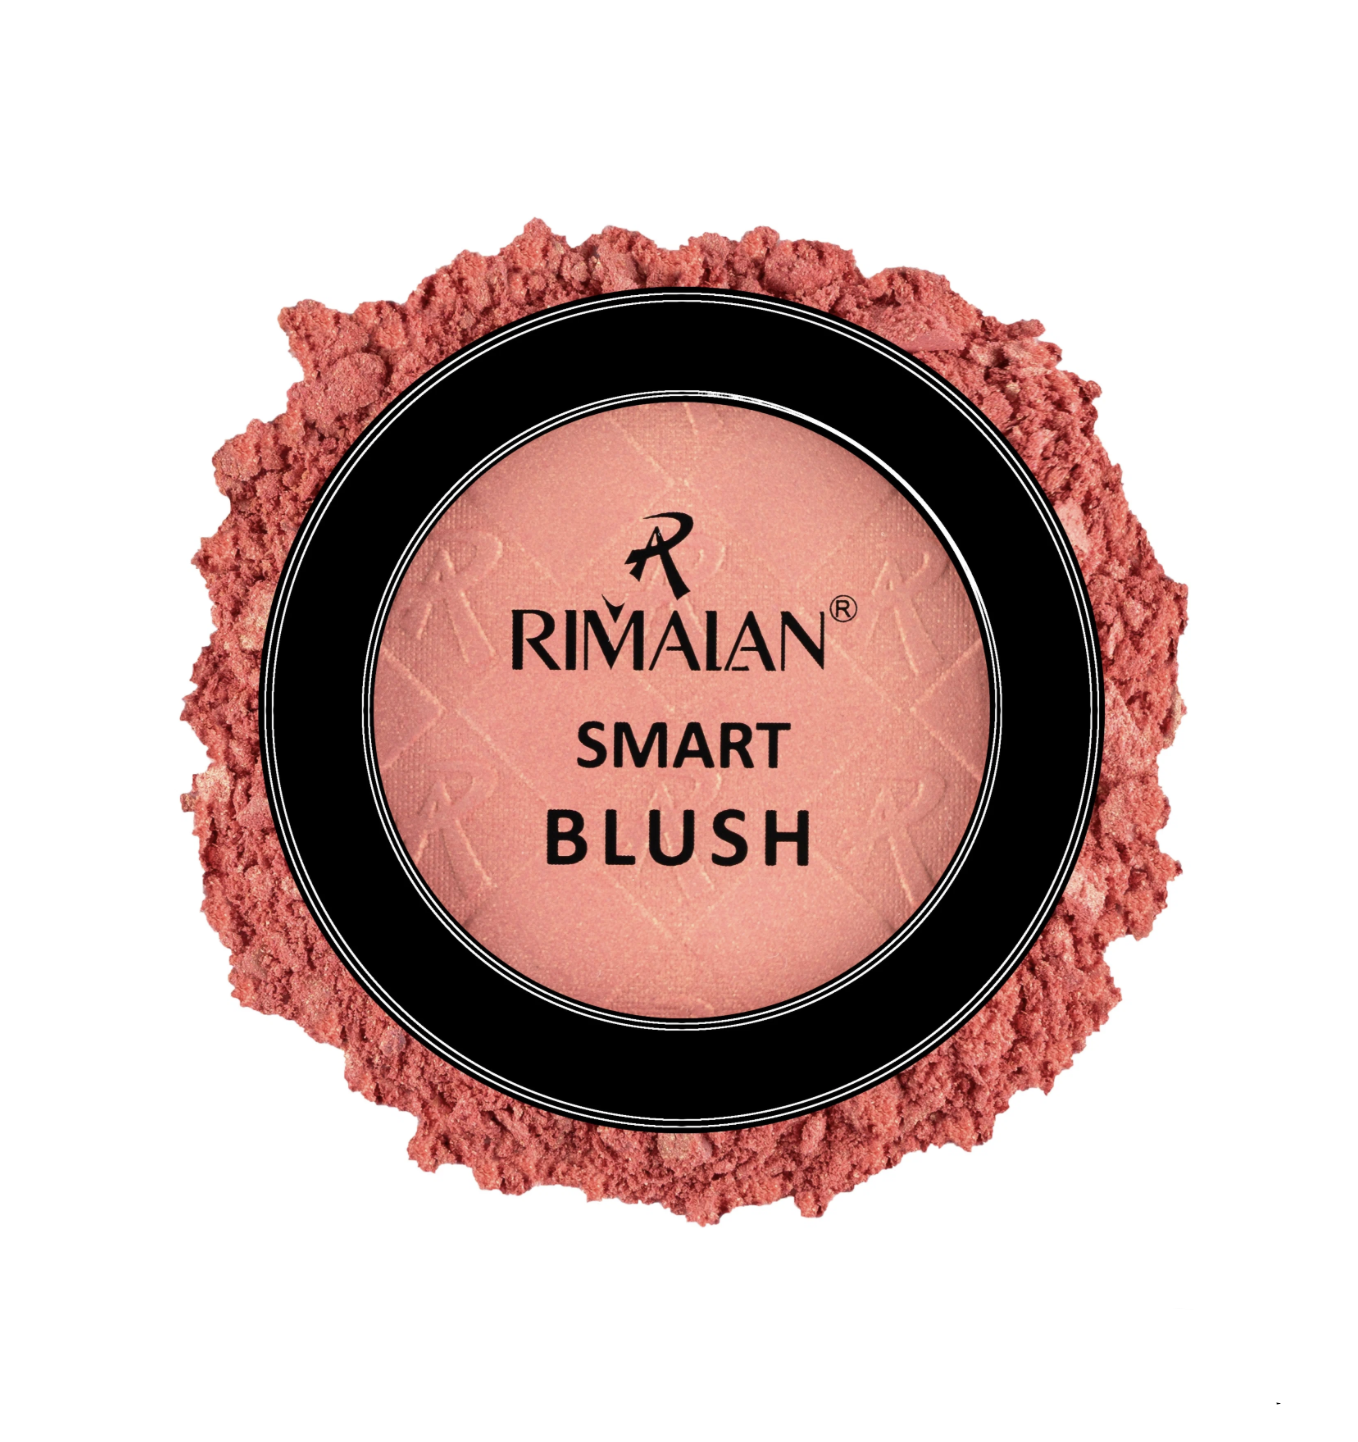   / Rimalan -     Smart Blush BL001-02, 9 